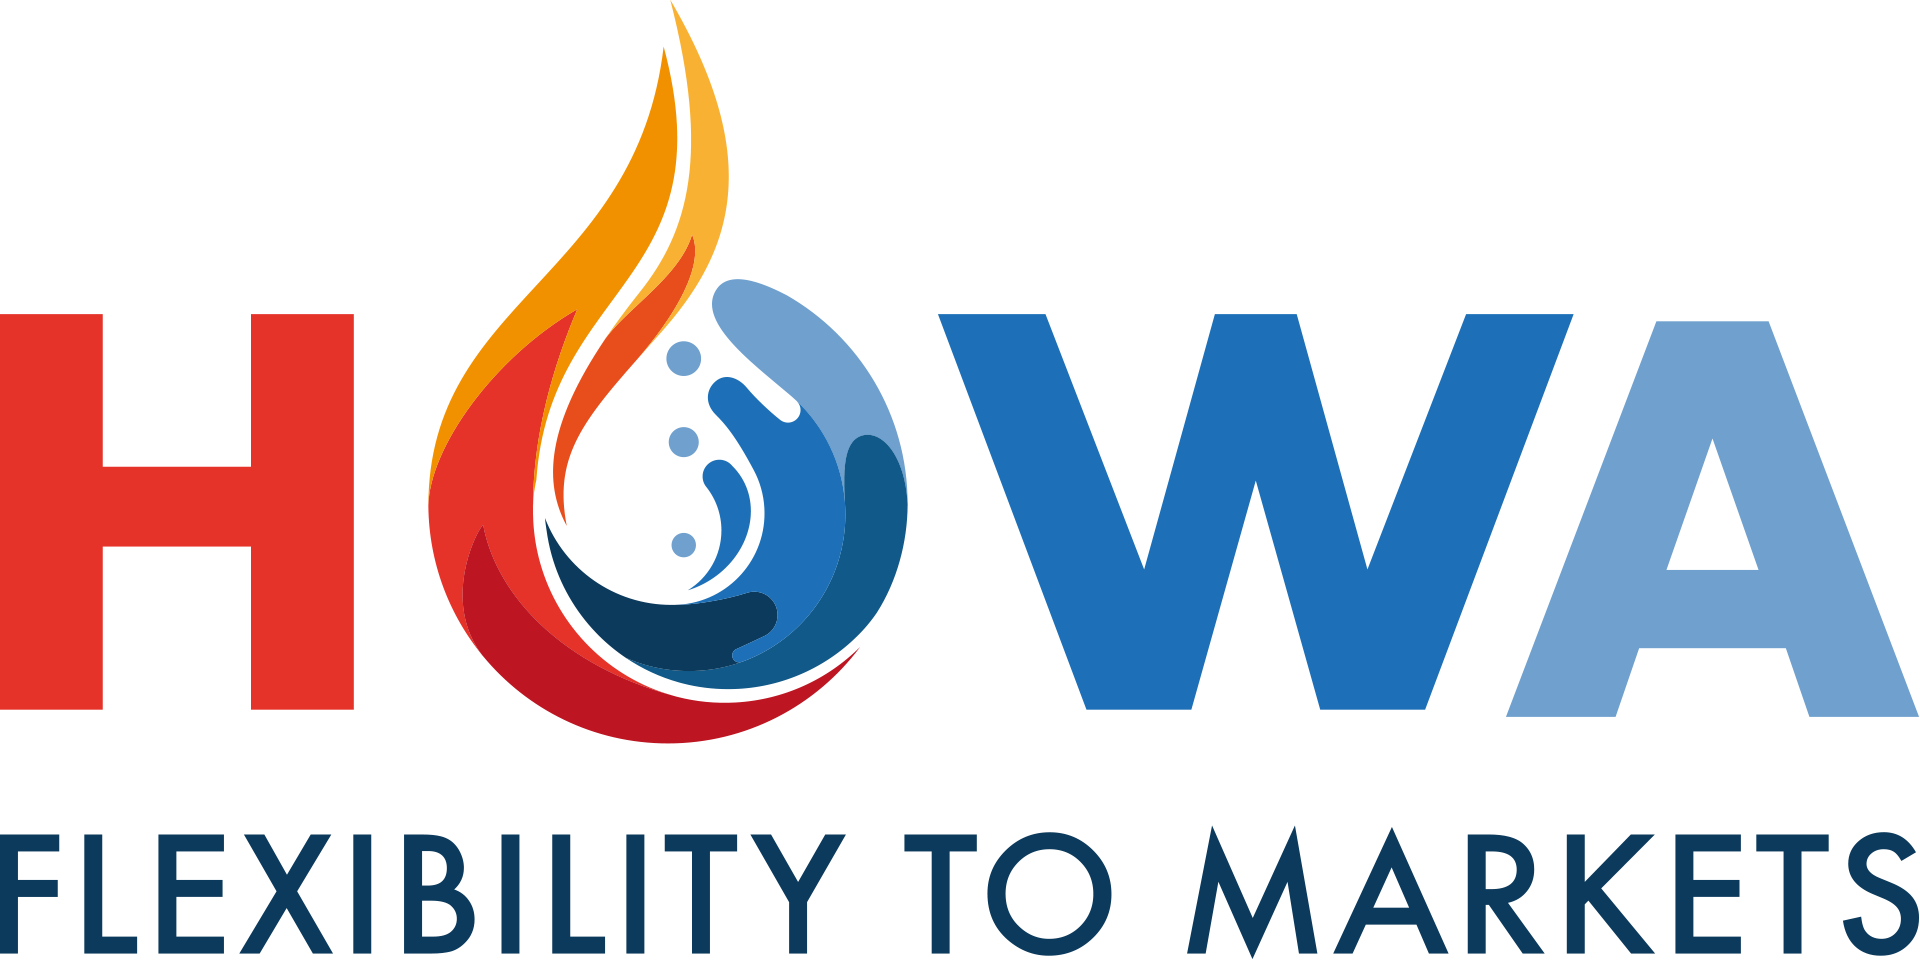 Project Logo: HOWA - Flexibility to market